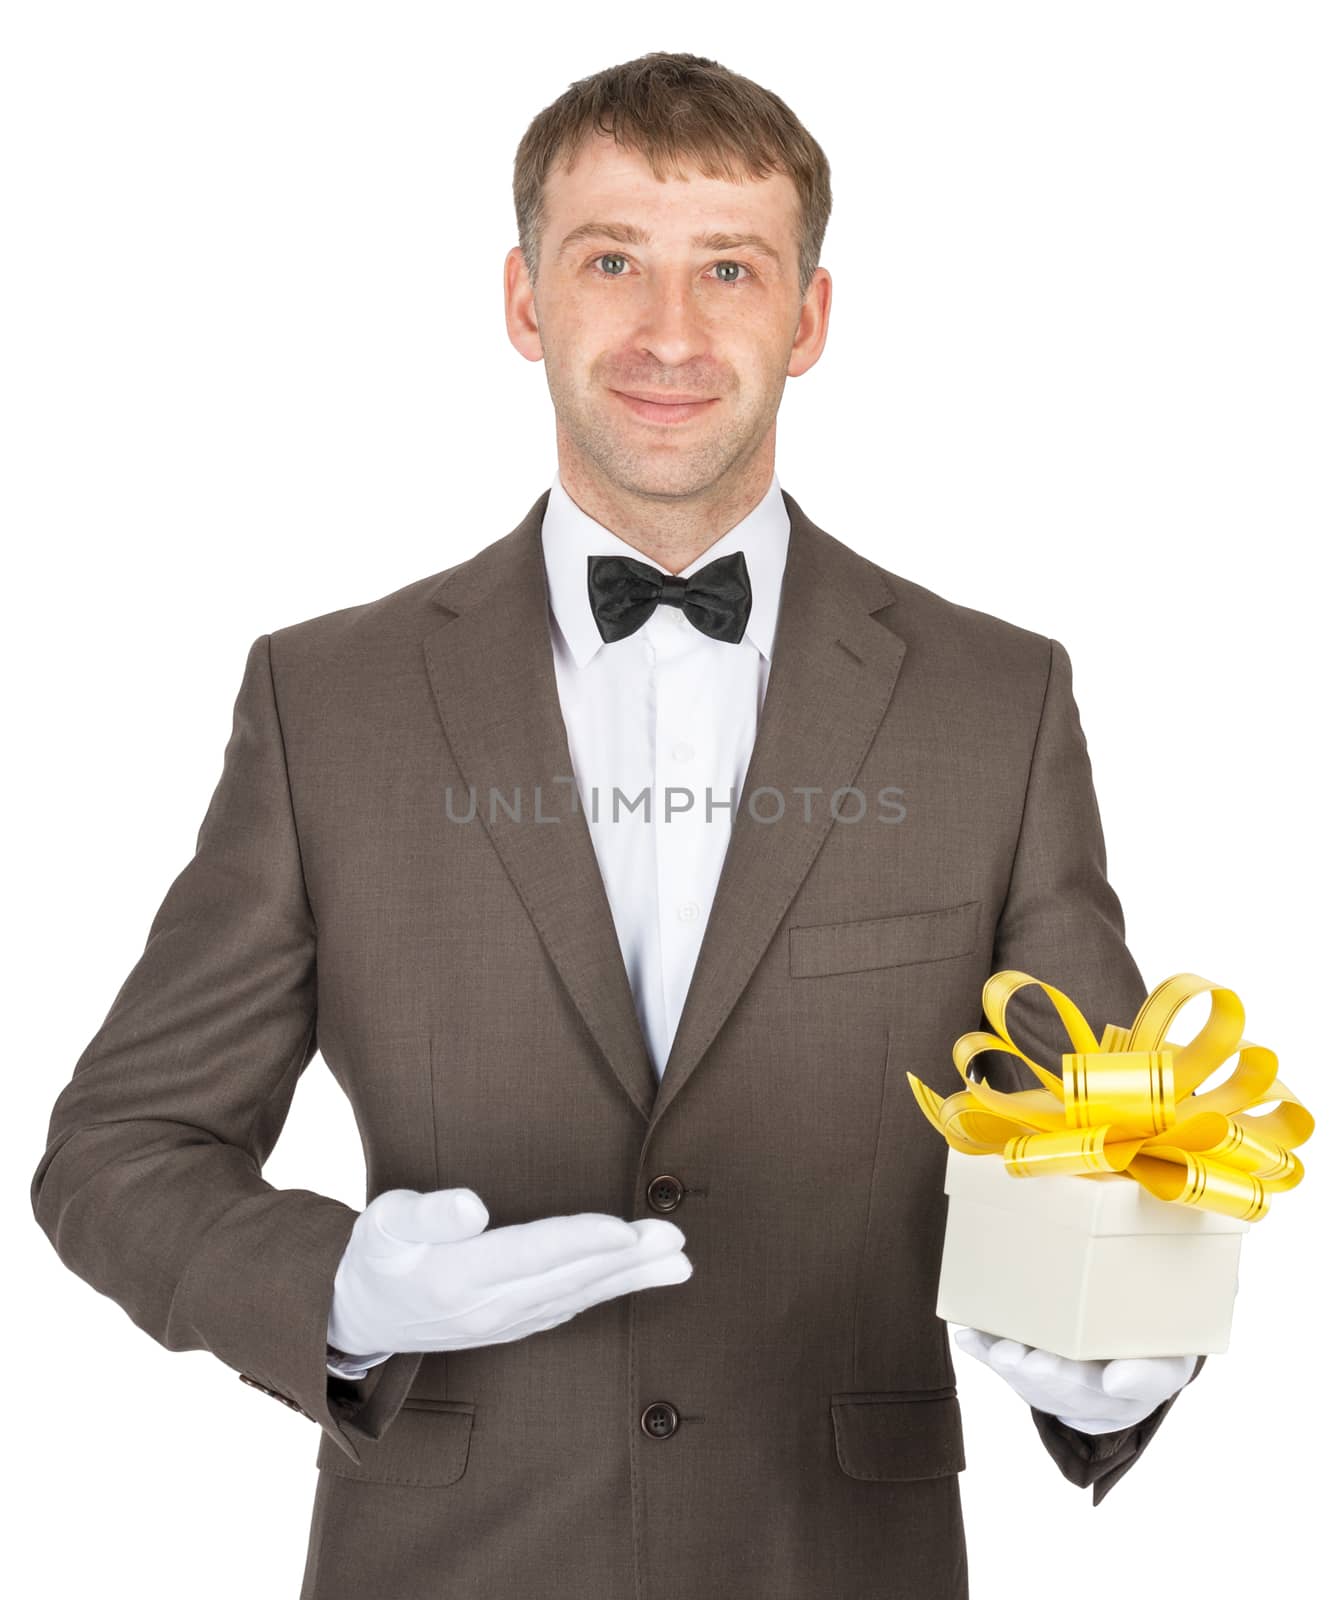 Man holding gift box with ribbon isolatedd on white background